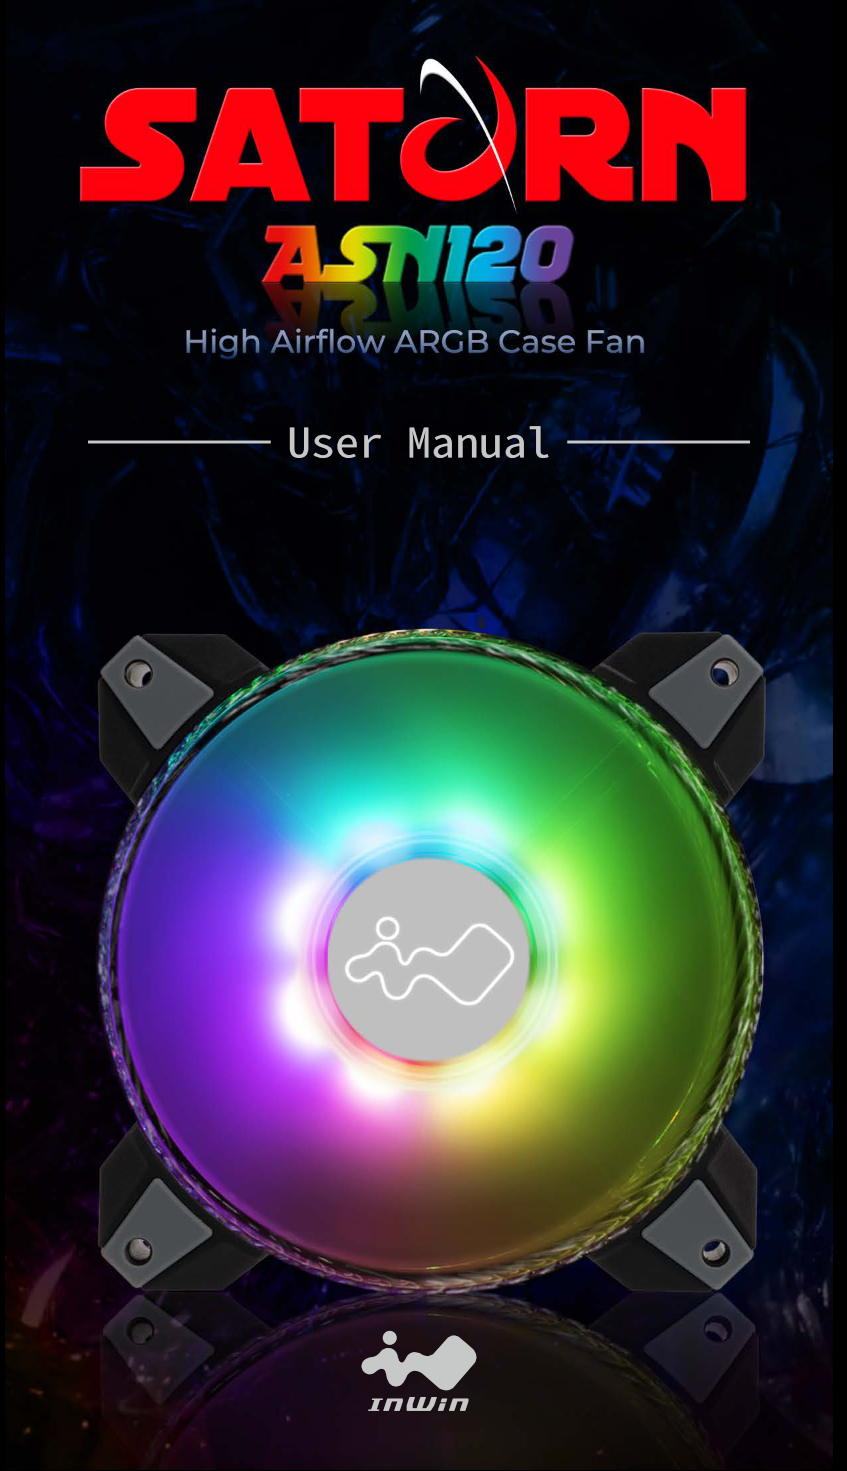 Saturn ASN120 High Airflow ARGB Case Fan User Manual